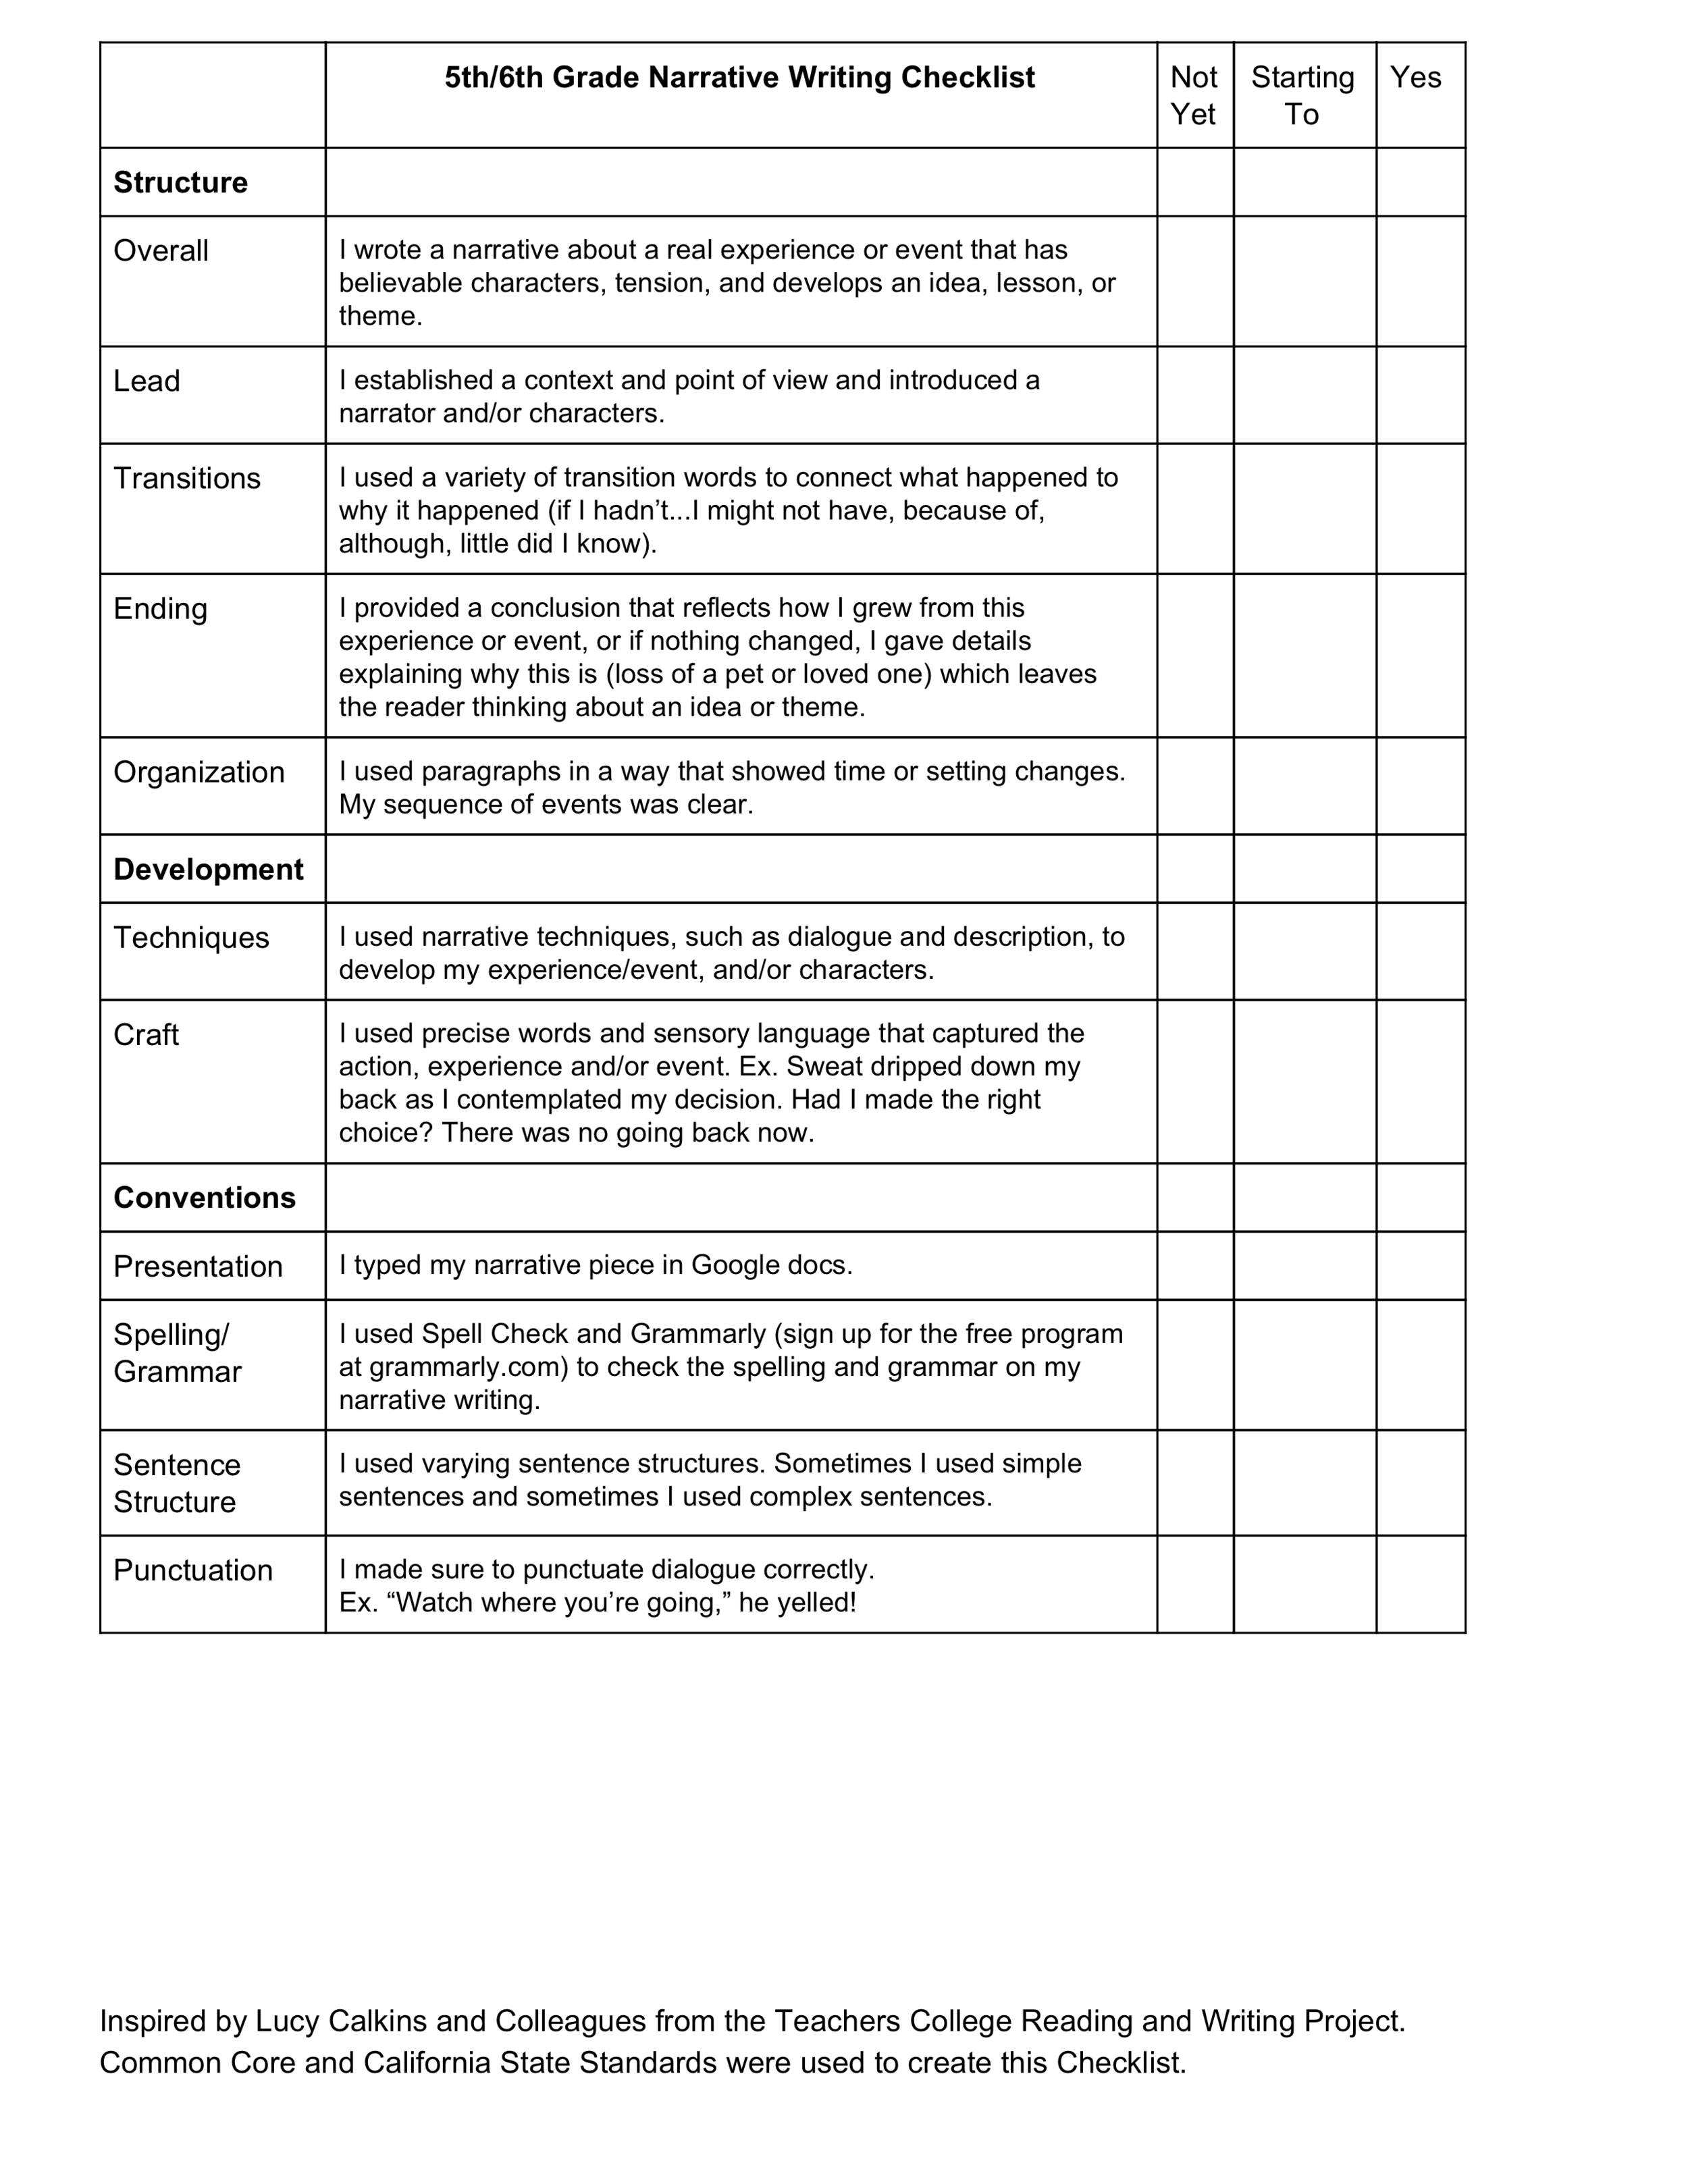 checklist for essay